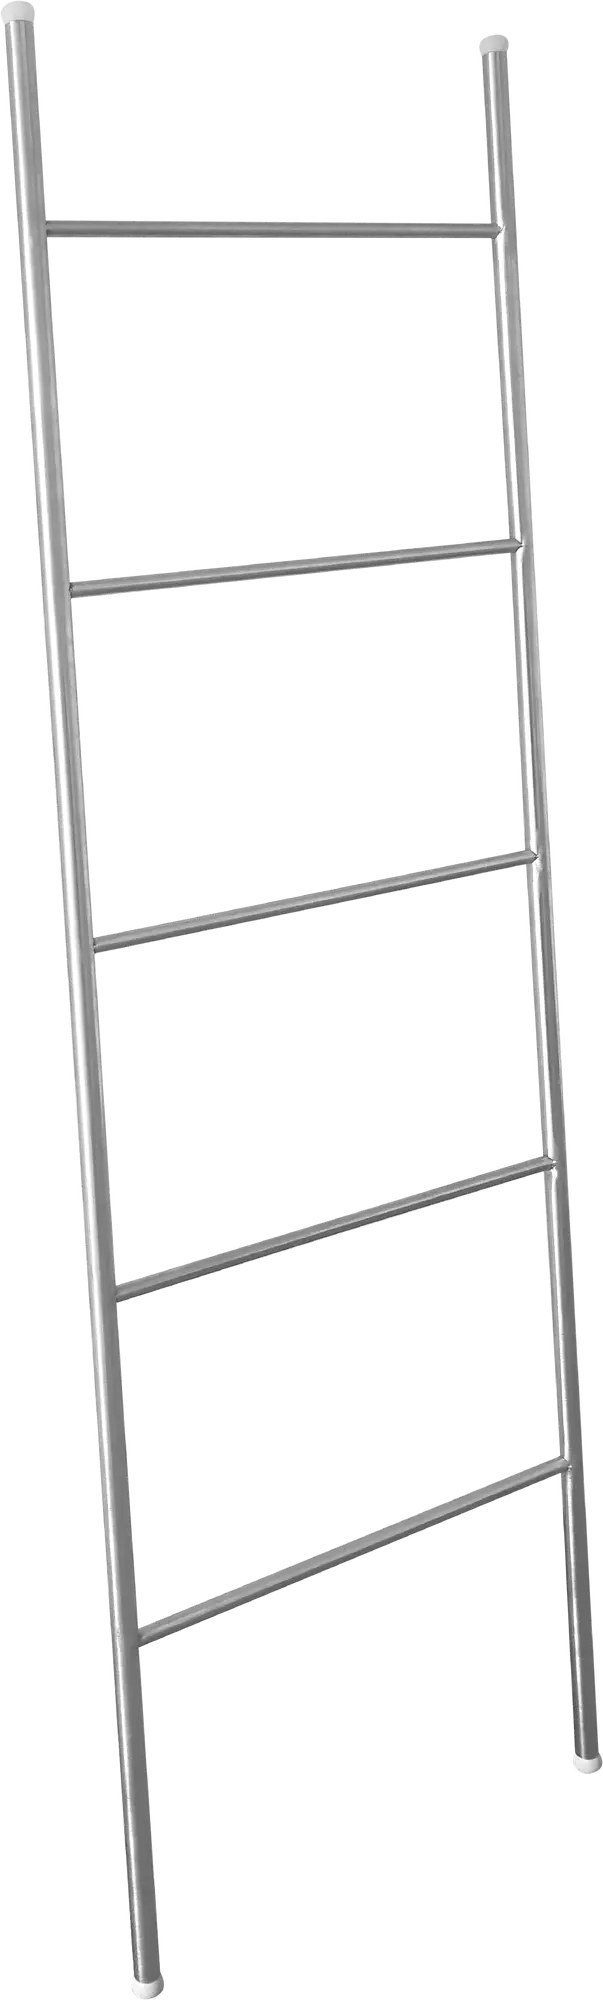 Toallero en escalera loft gris cepillado 42x153 cm